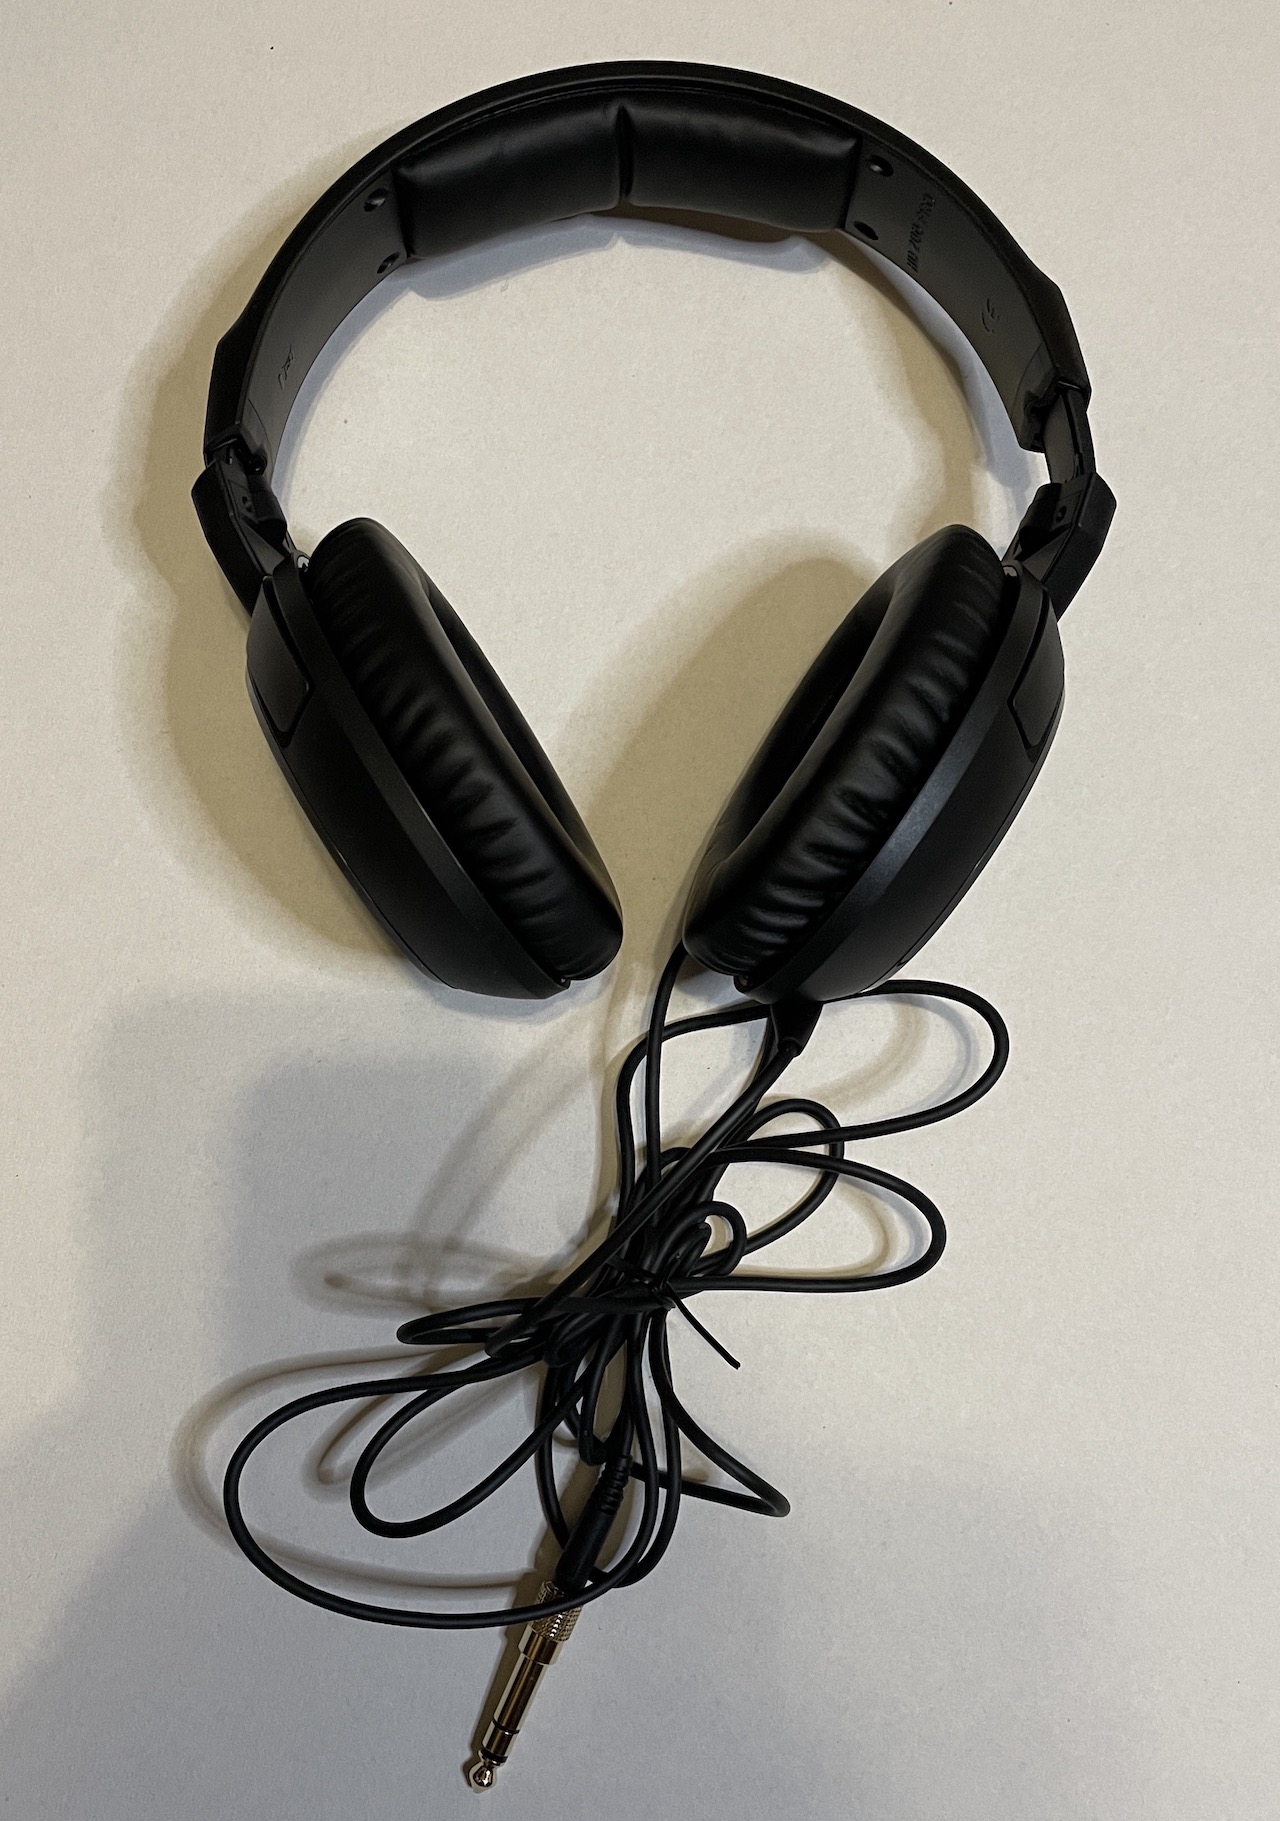 Sennheiser HD 200 PRO headphones